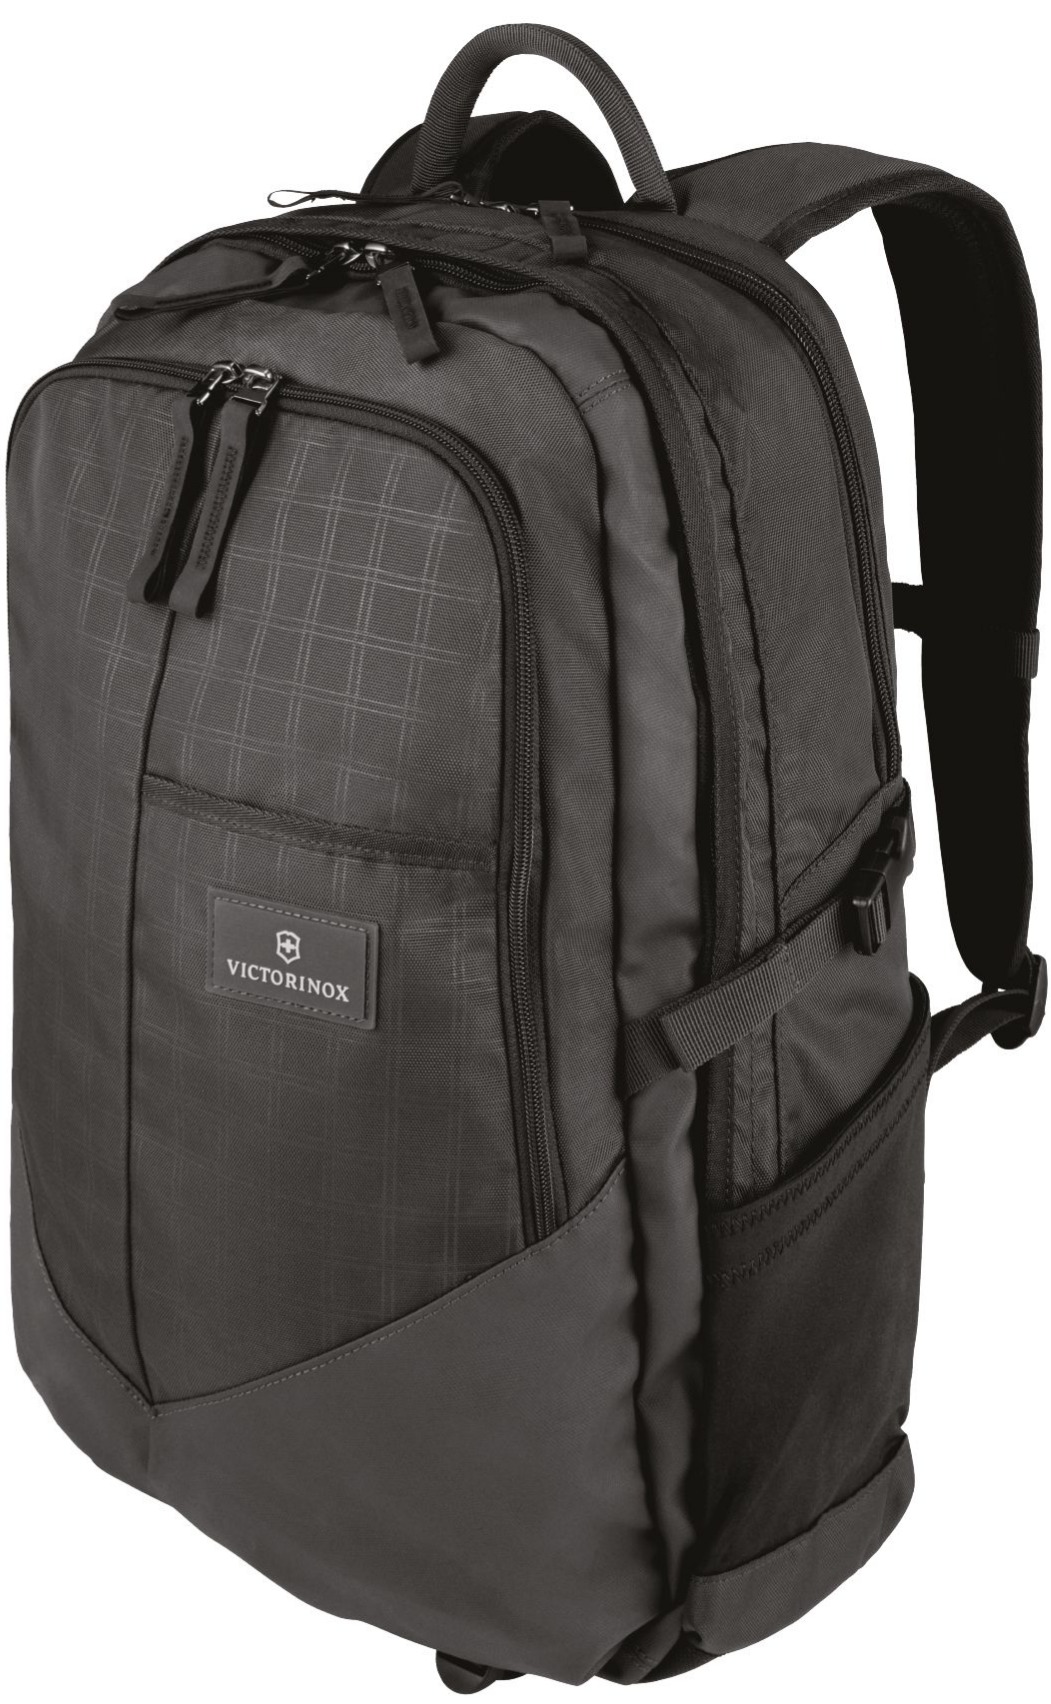 Dlx 17" Laptop Backpack, Urban Finn